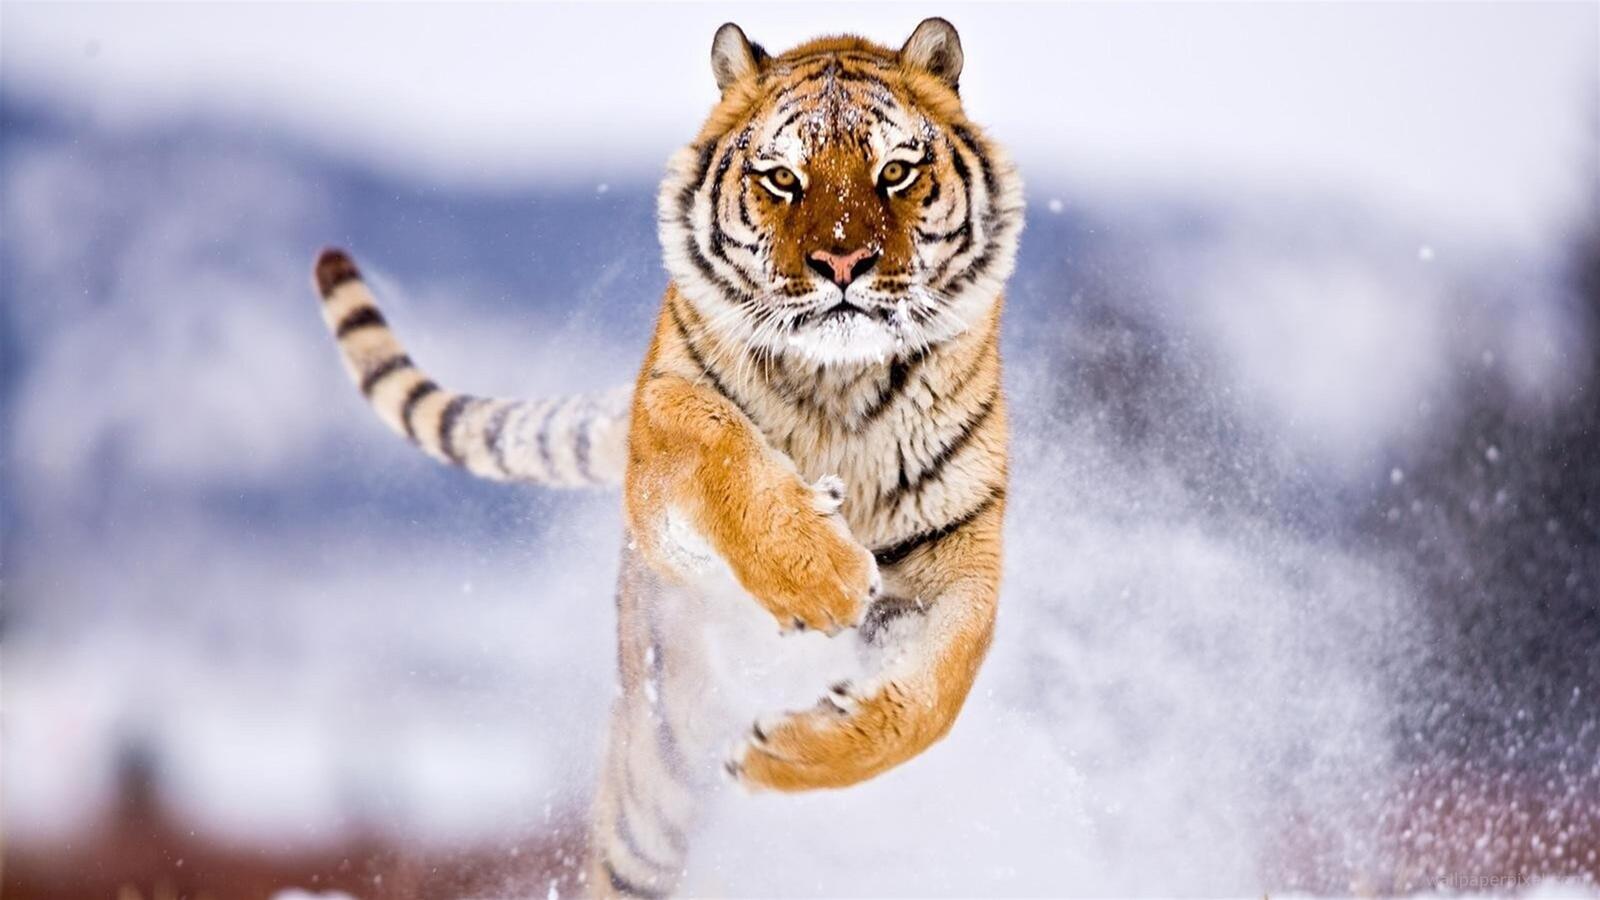 Wallpapers tiger in jump predator tiger on the desktop